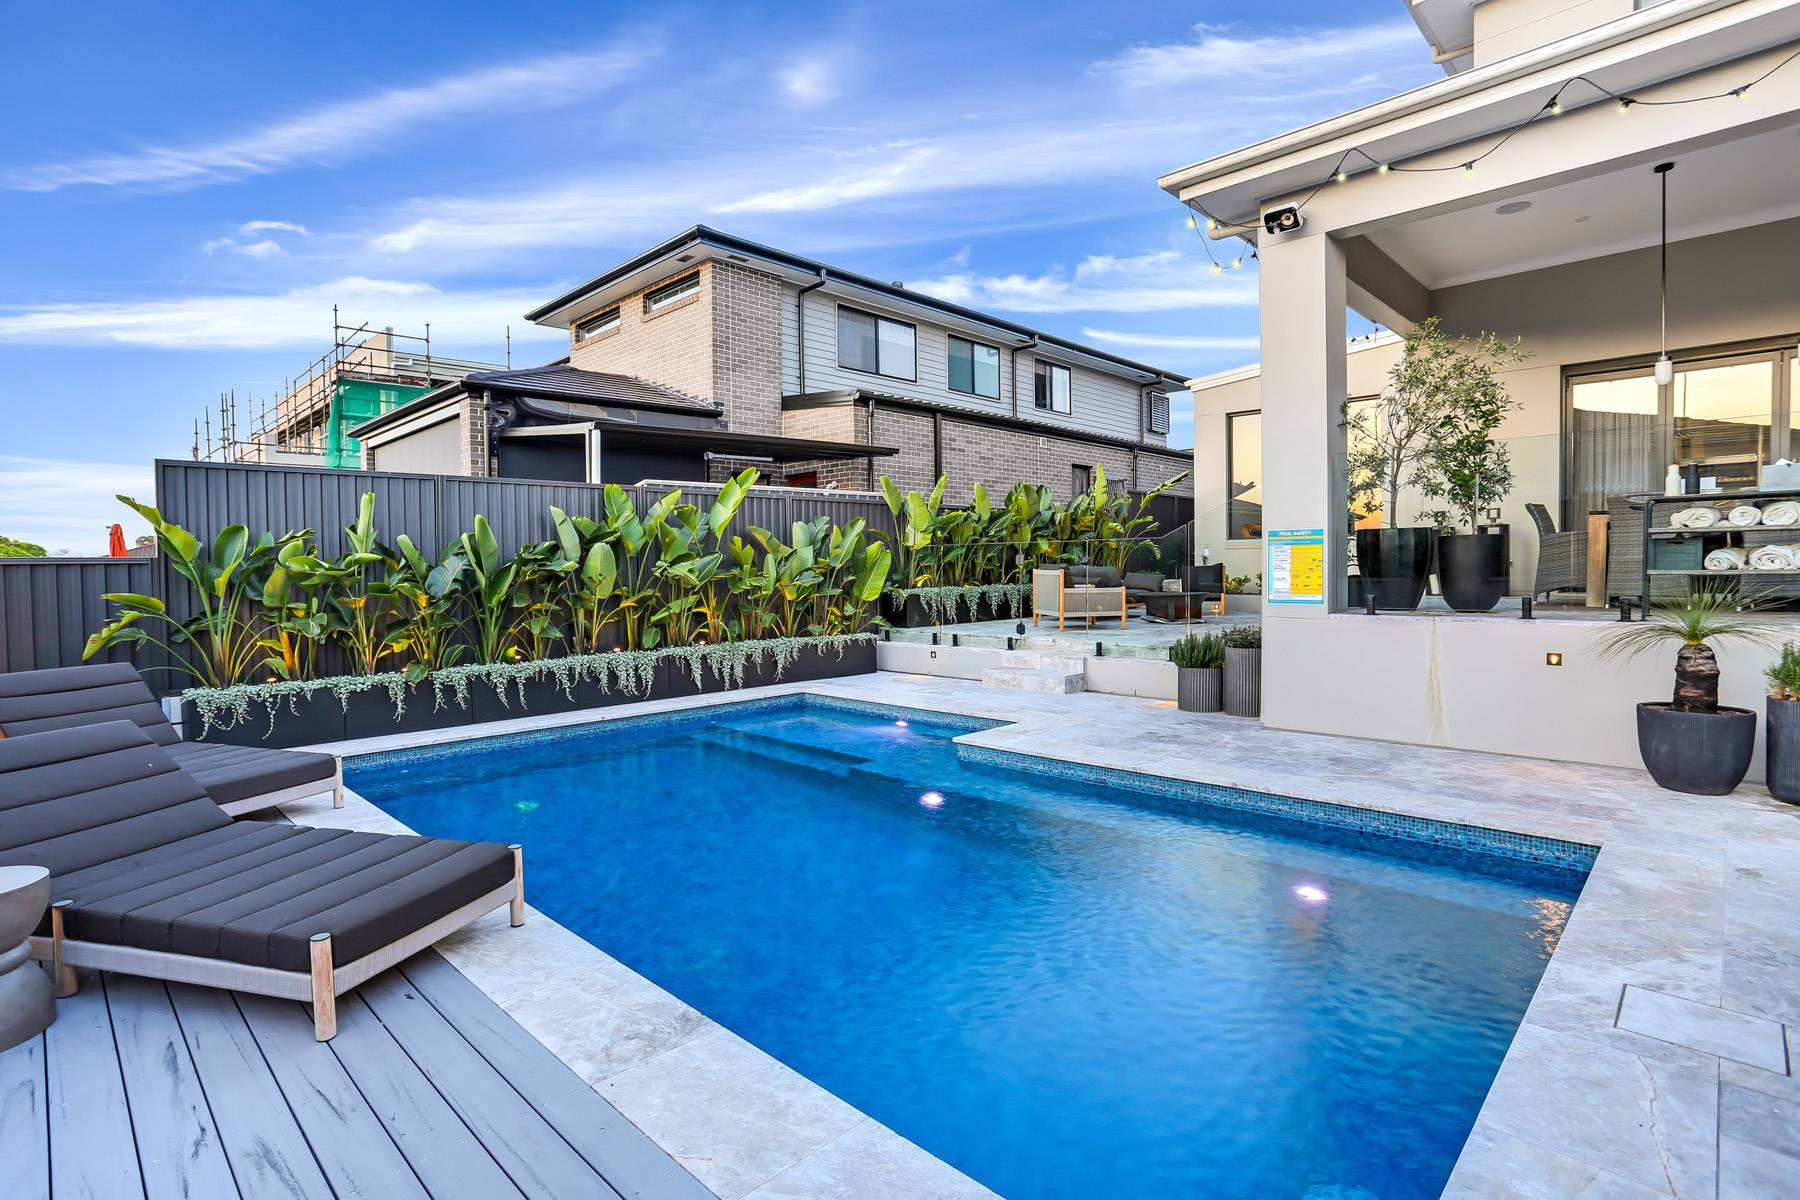 Modern backyard with pool